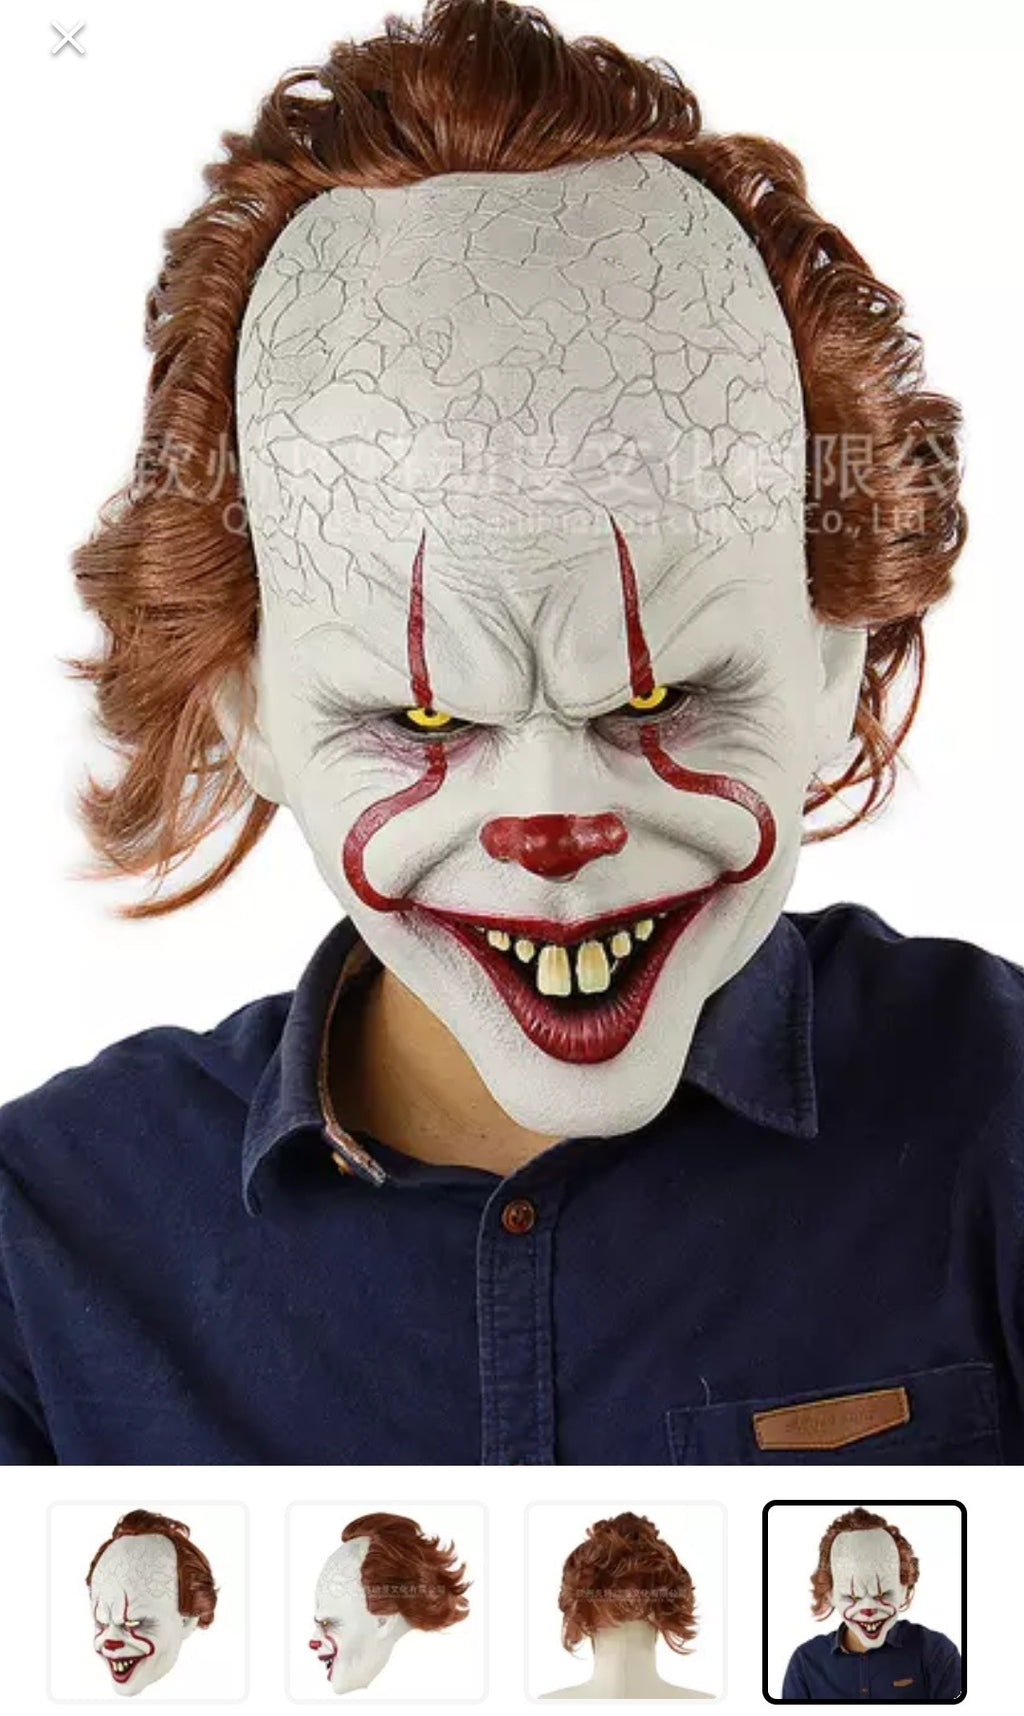 IT the clown mask